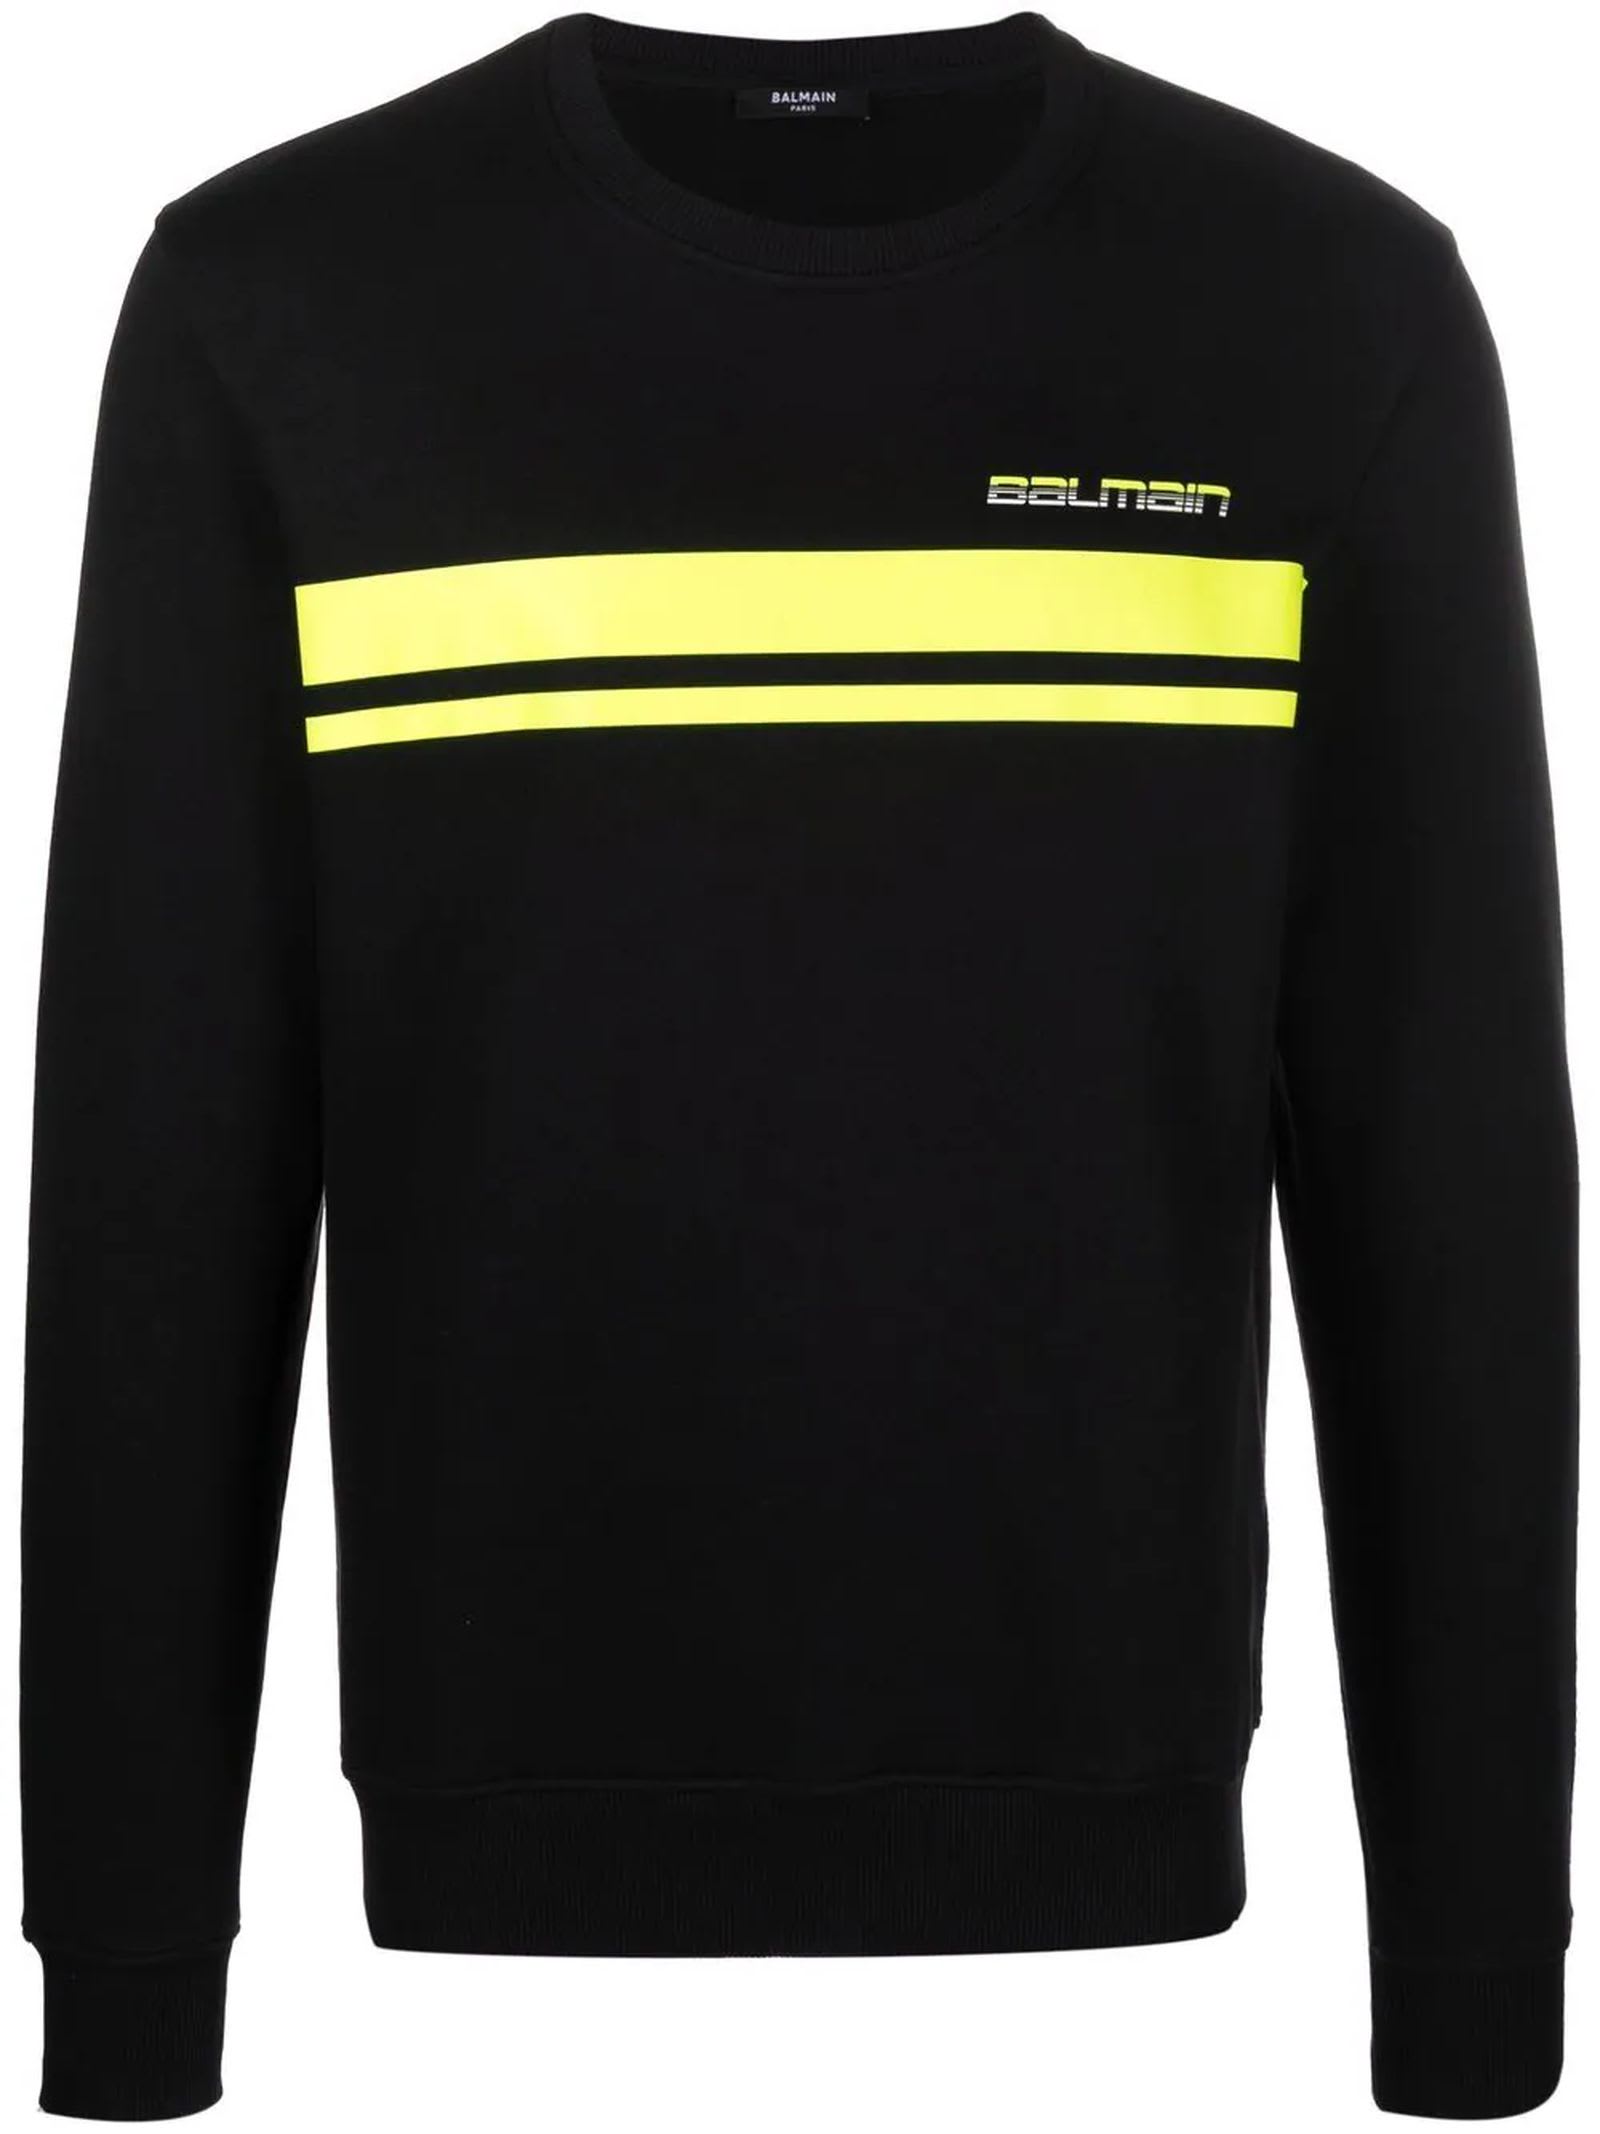 Balmain Black And Neon Yellow Cotton Sweatshirt